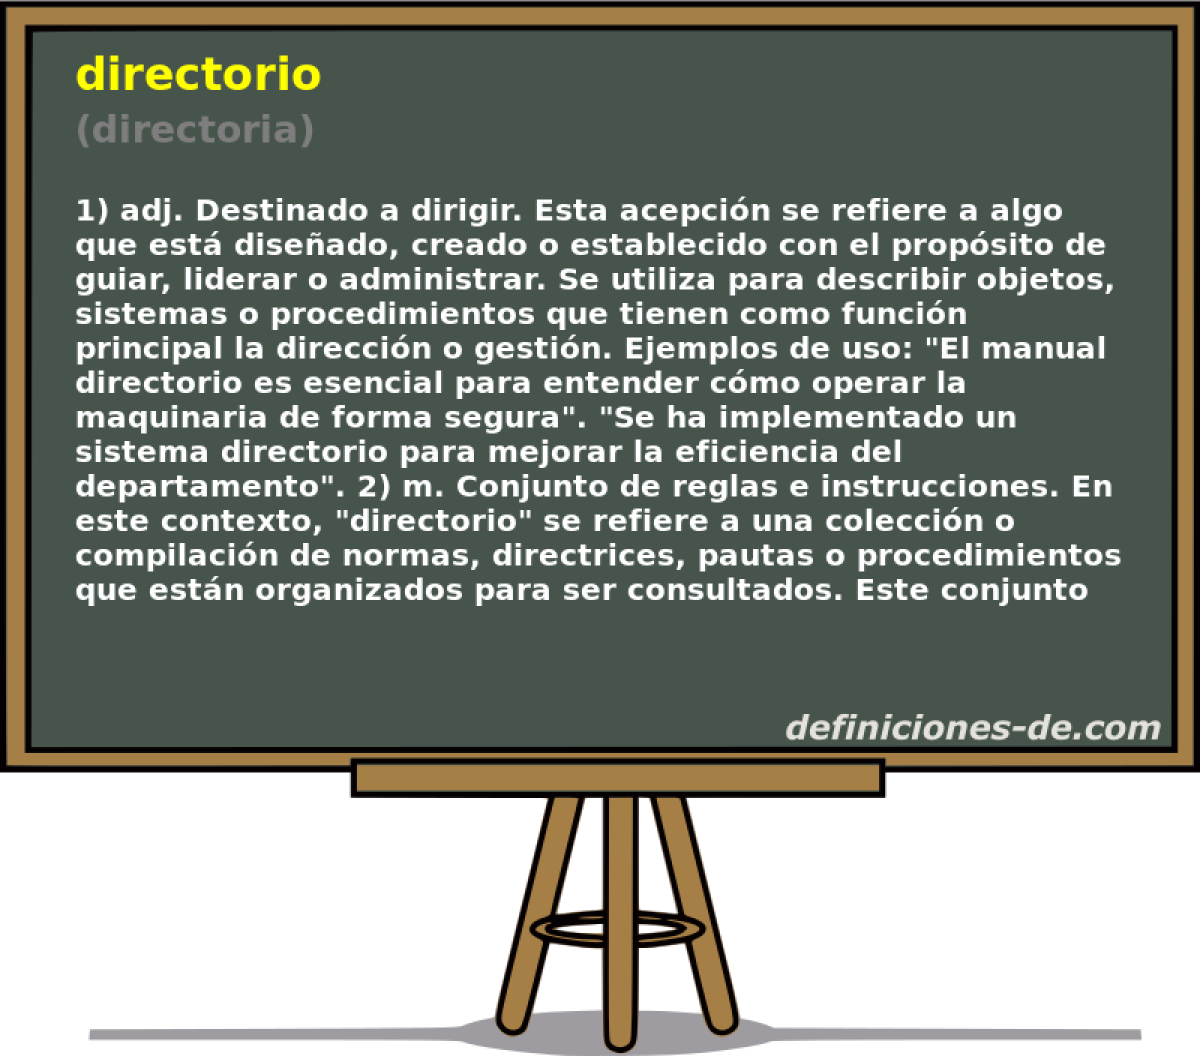 directorio (directoria)